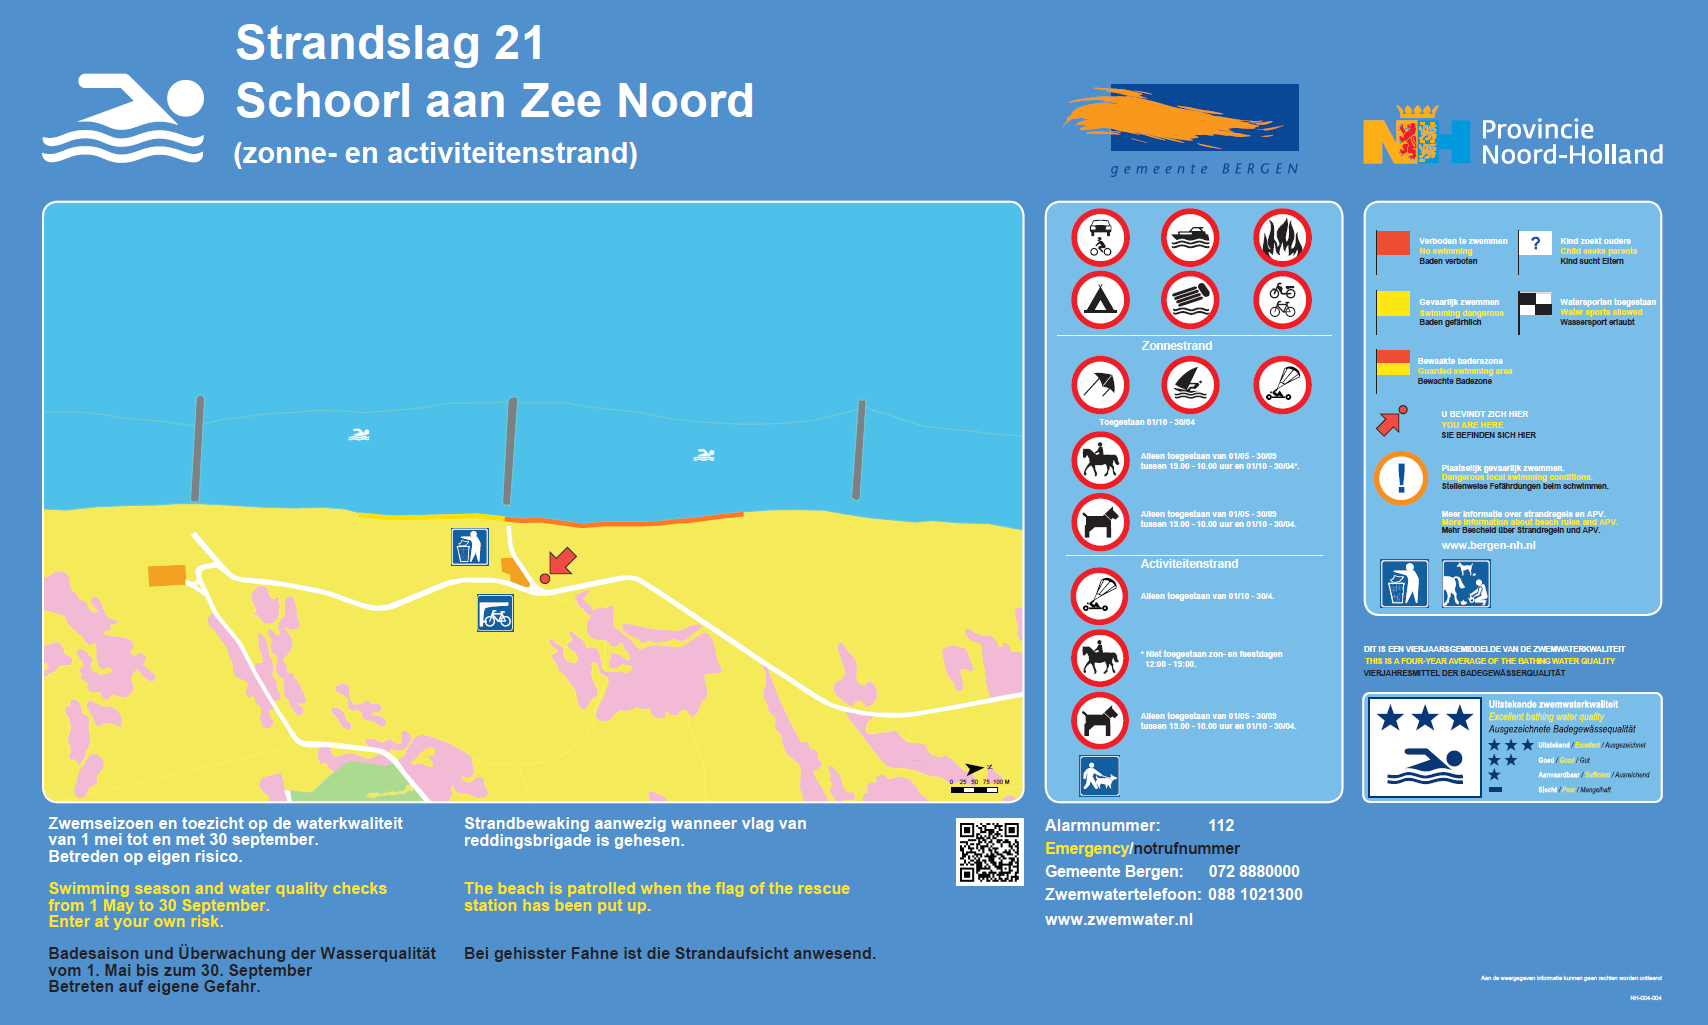 The information board at the swimming location Schoorl aan Zee Noord, Strandslag 21